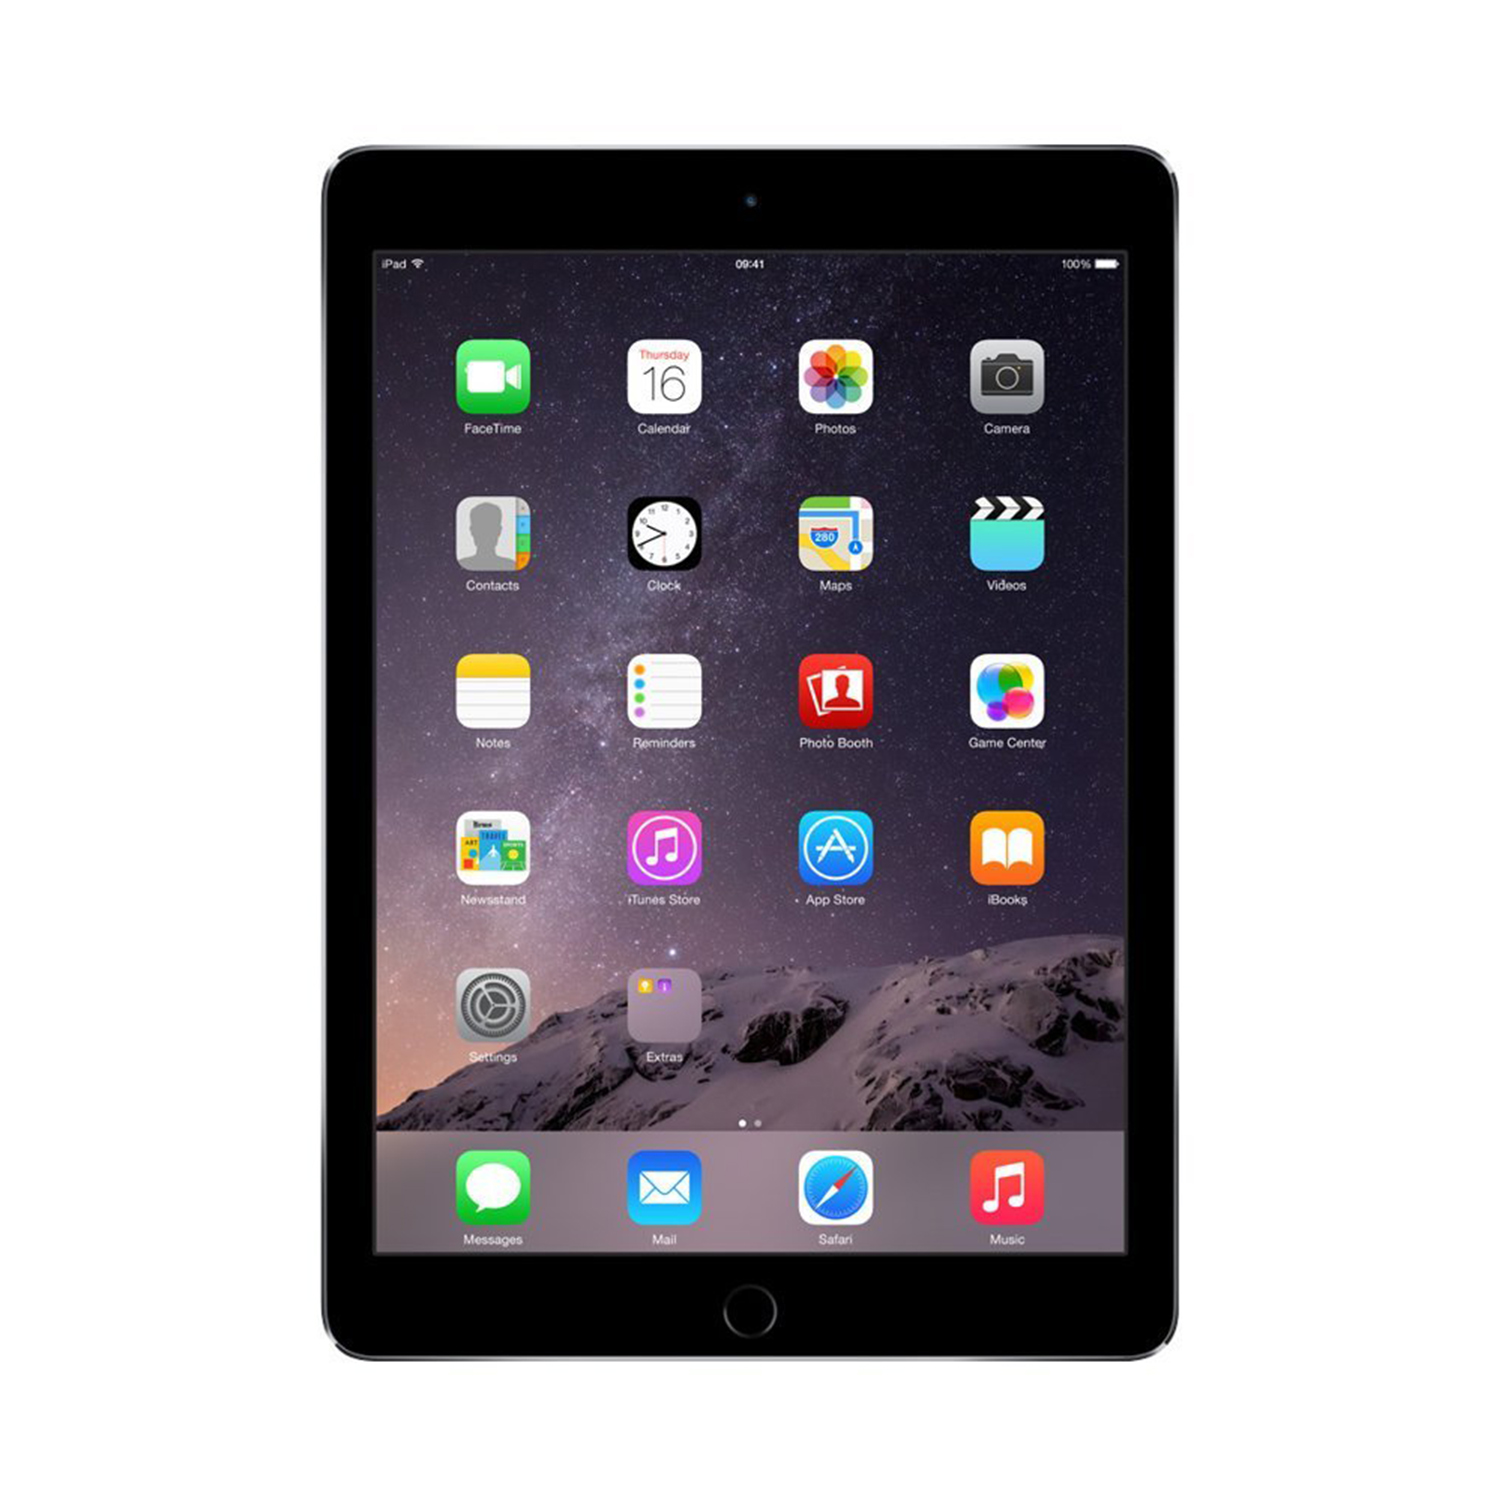 Restored Apple iPad Air 2 64GB 9.7 Retina Display Wi-Fi Tablet - Space Gray - MGKL2LL/A (Refurbished) - image 2 of 4